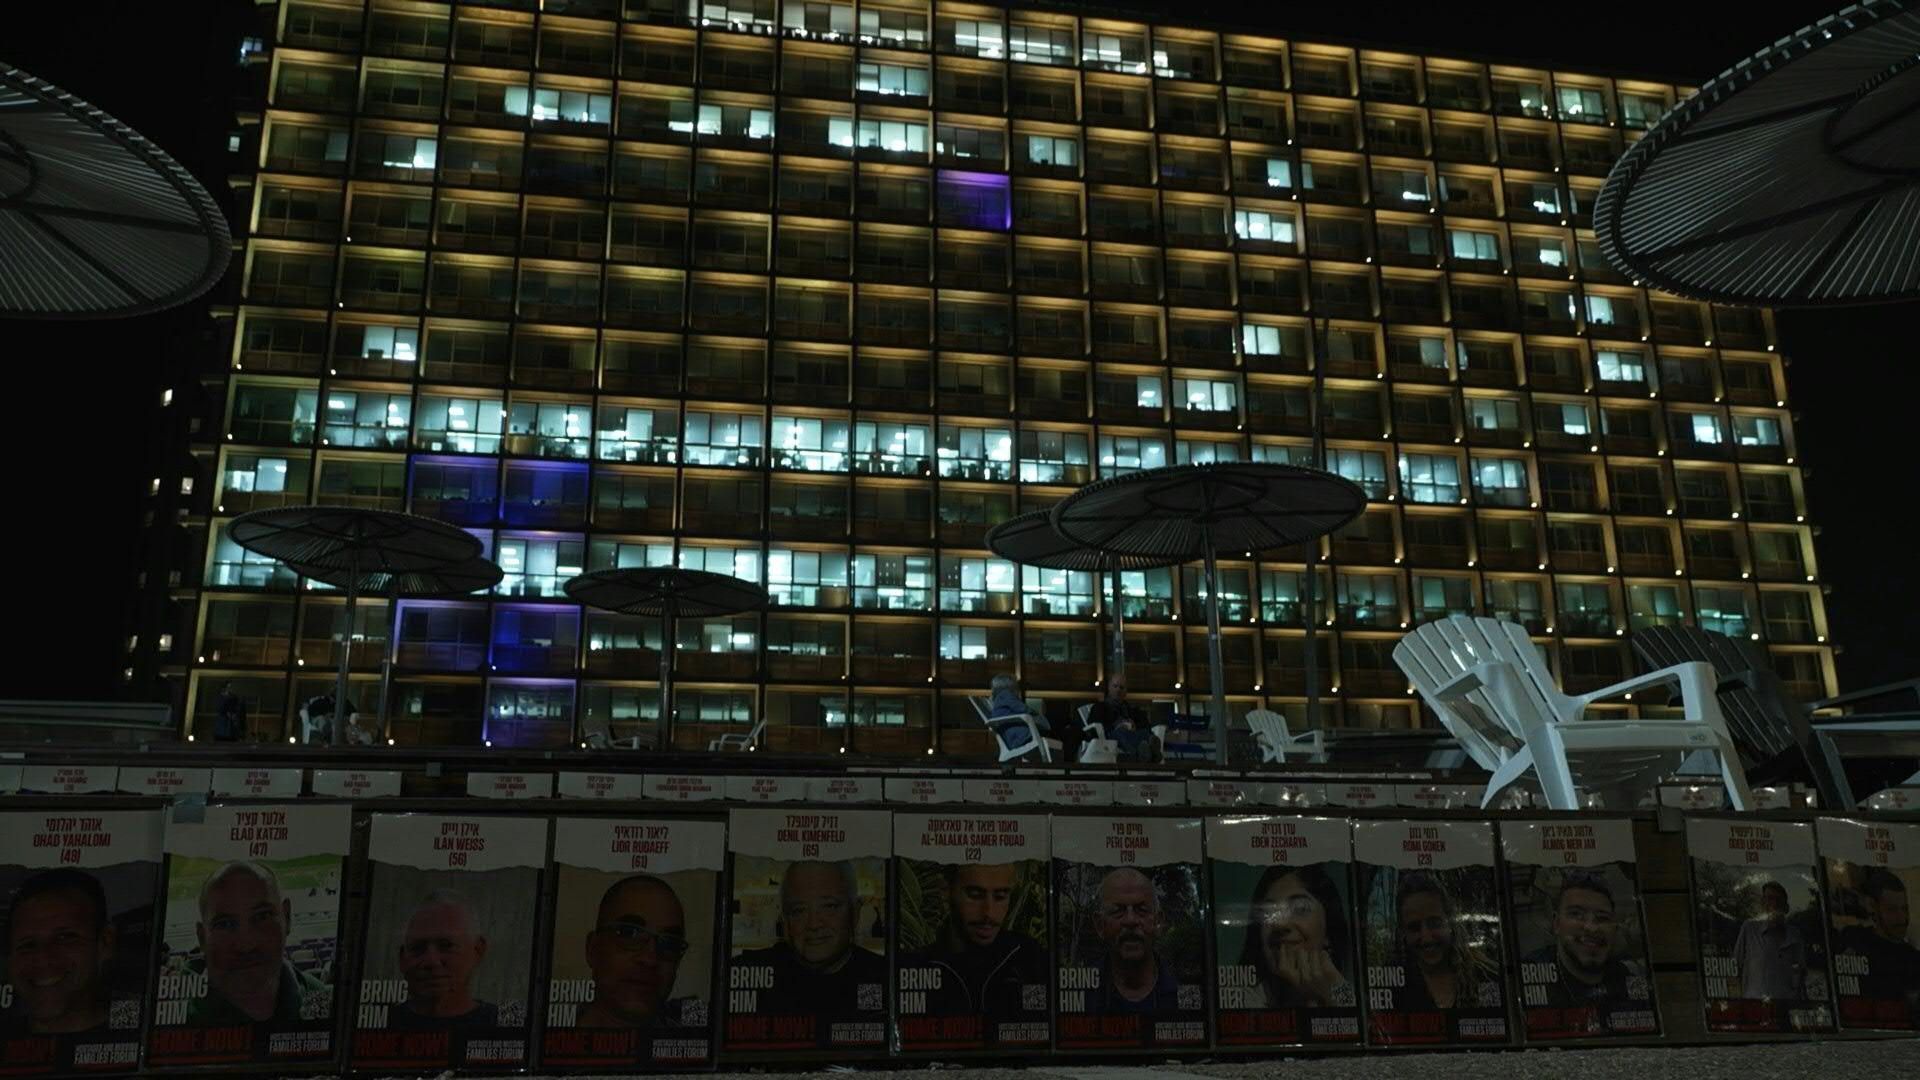 Israel: Tel Aviv city hall illuminated in yellow for New Year's Eve